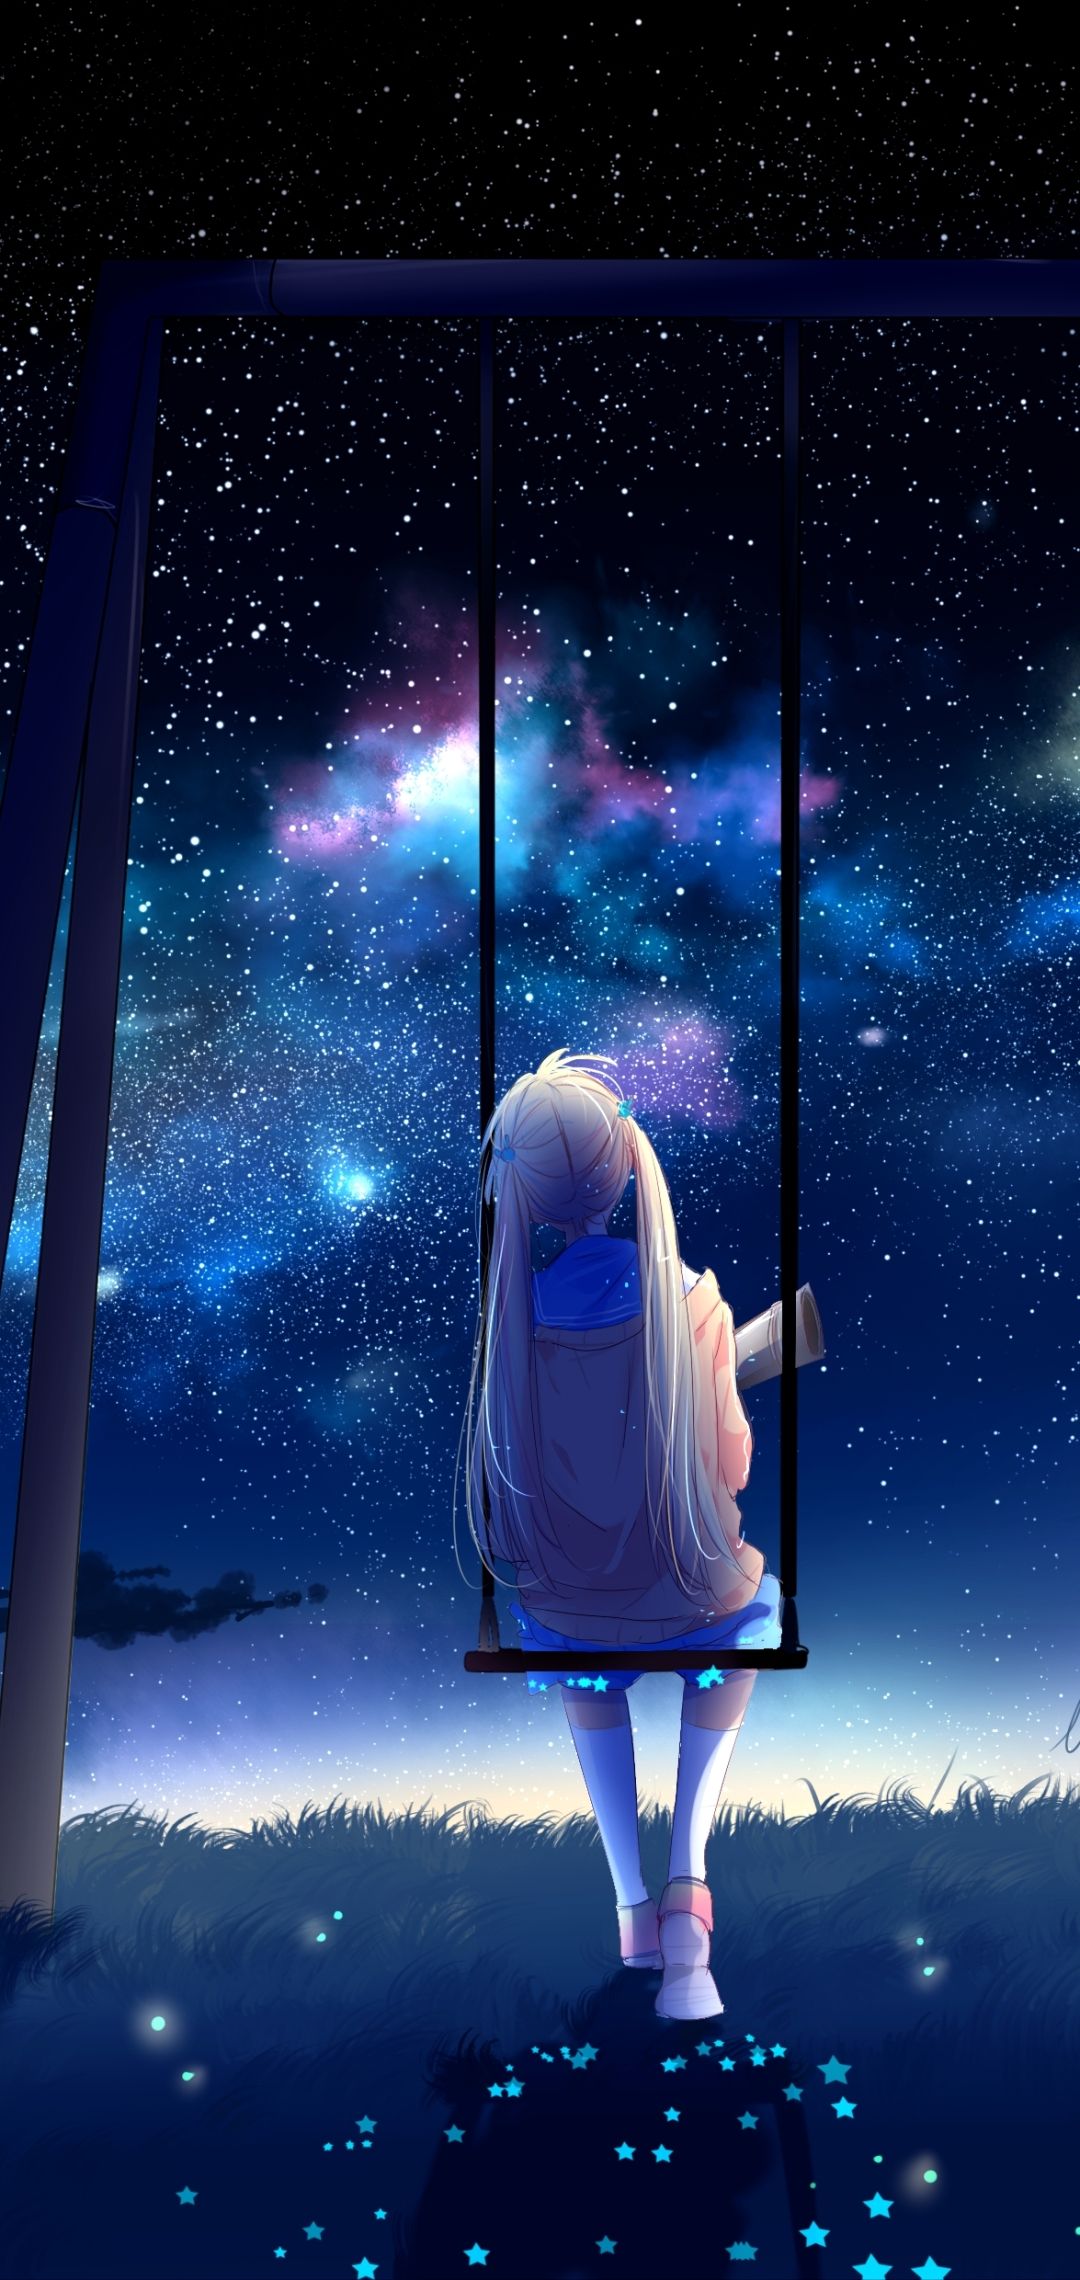 Anime girl on a swing in the night sky - Calming